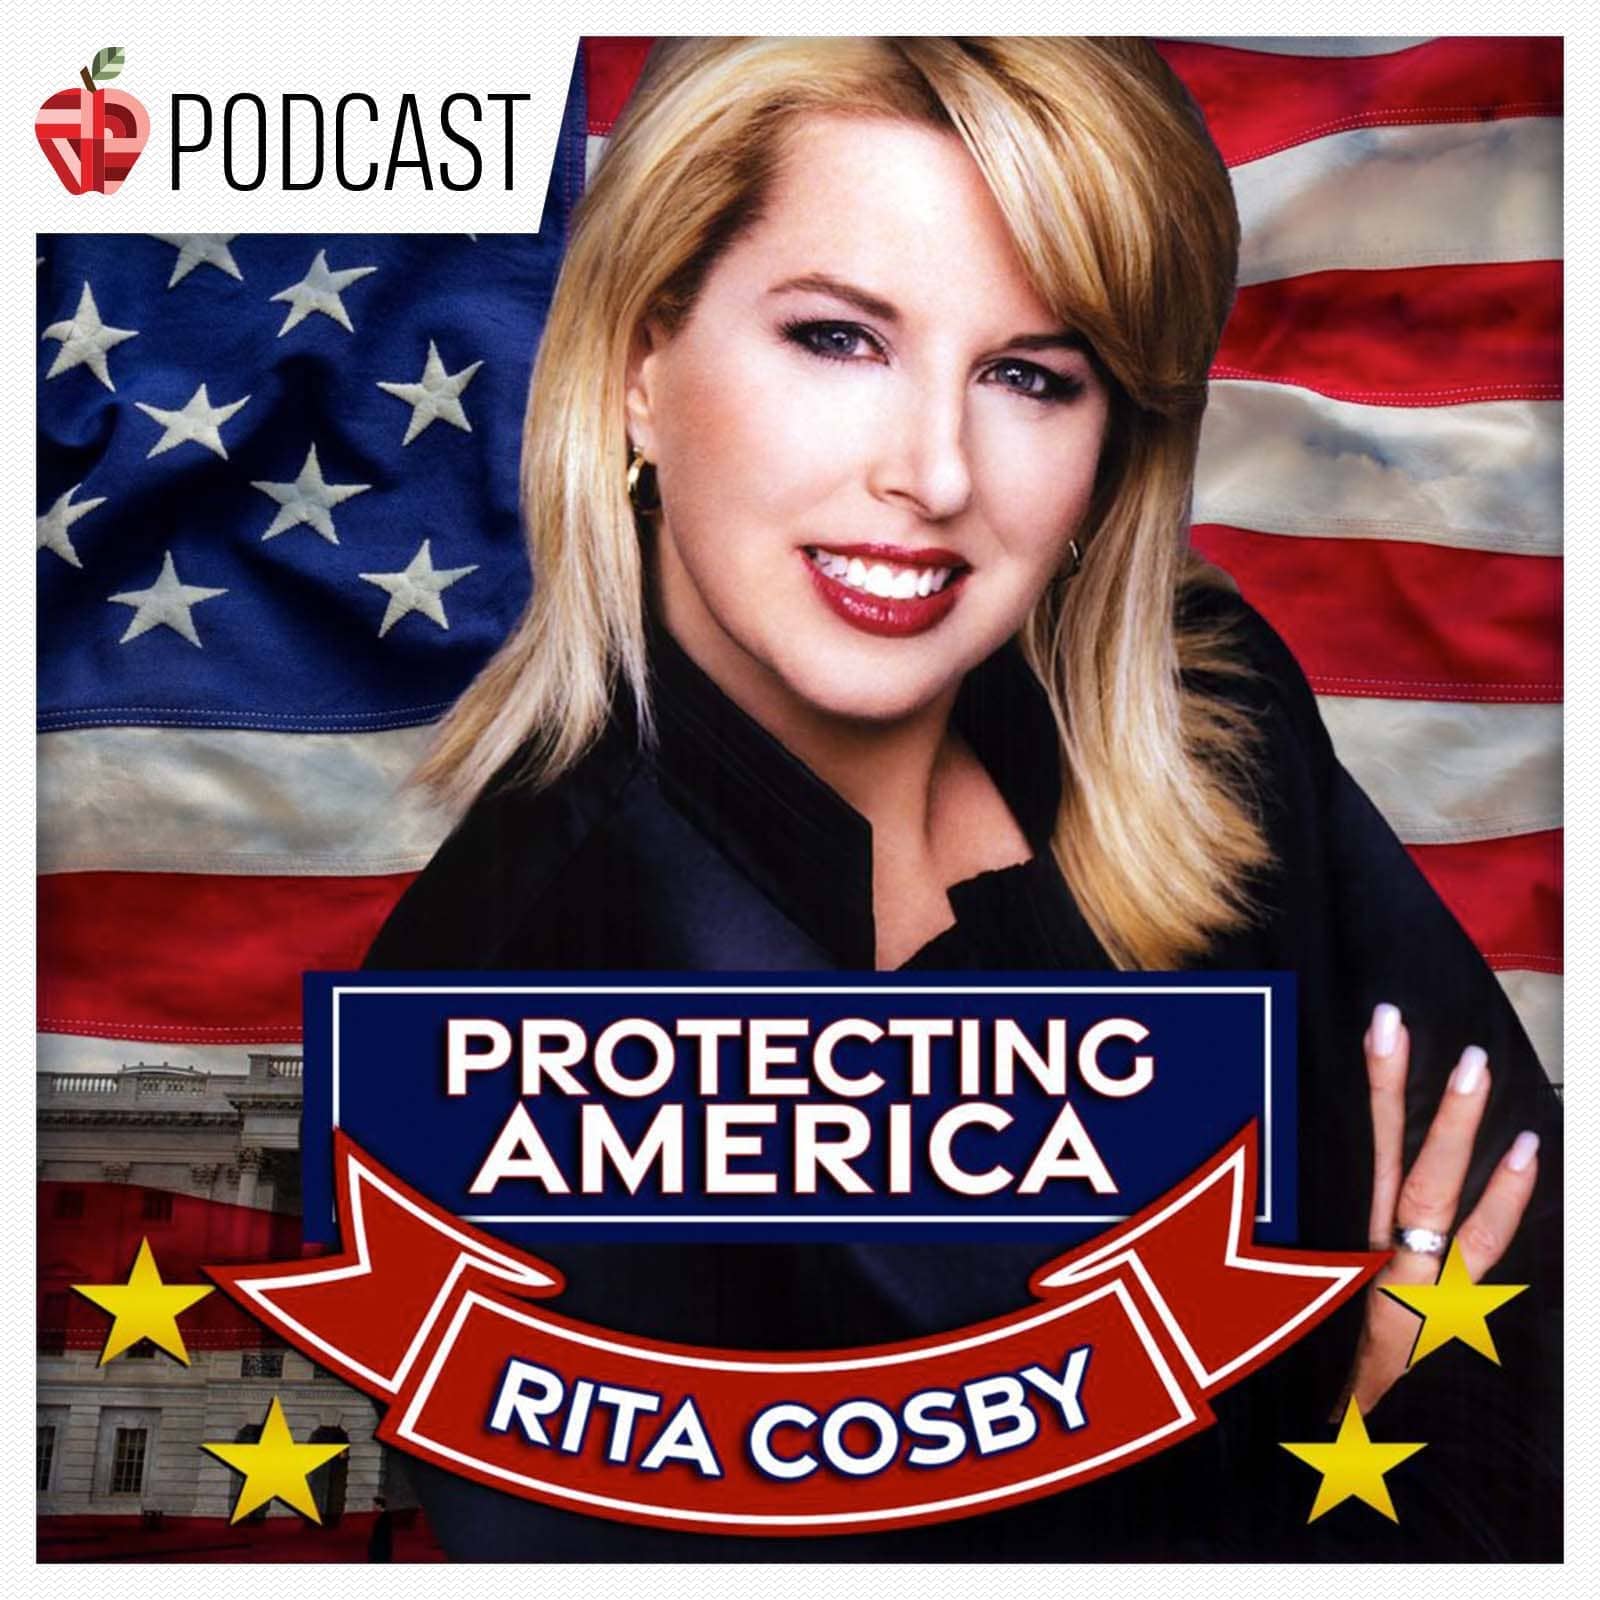 rita-cosby-protecting-america-correct-podcast-new-logo769255